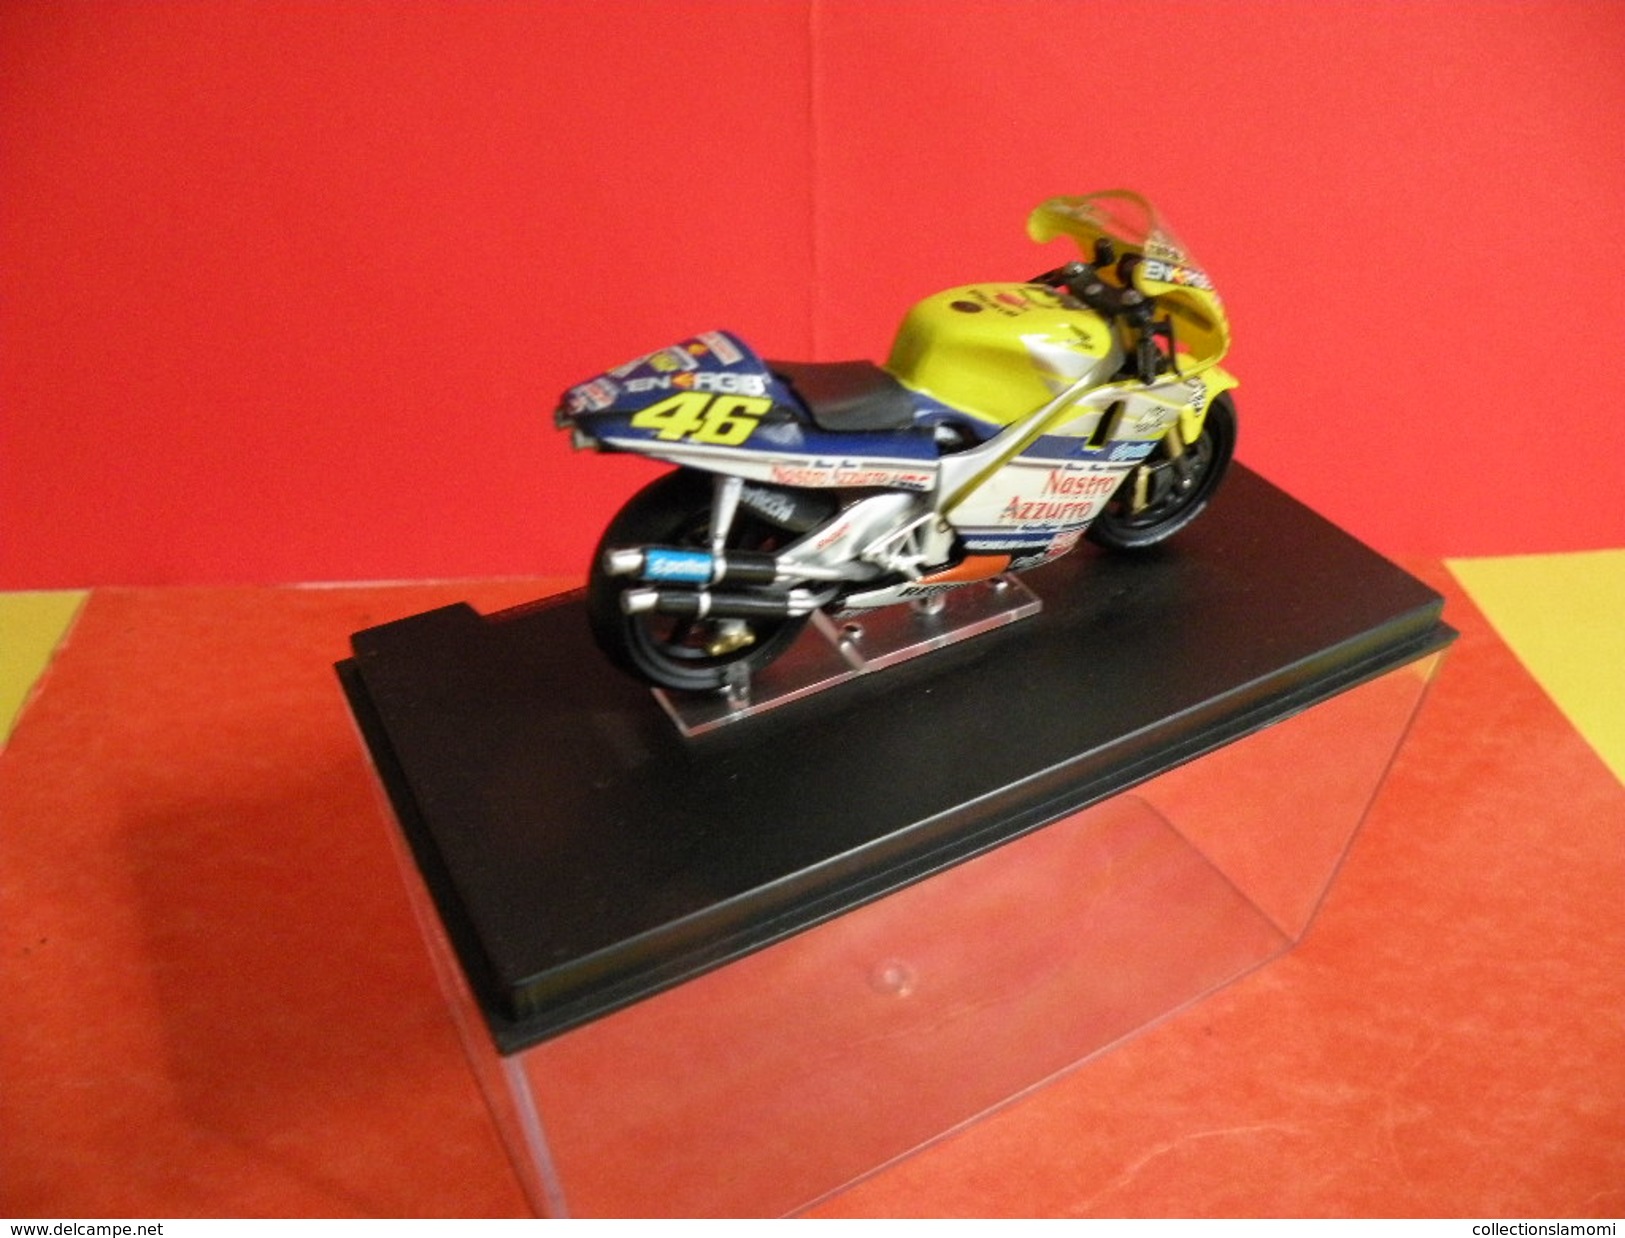 MOTO 1/24 > Honda NSR 500 Sous Vitrine > Valentino Rossi 2001 - Motorcycles